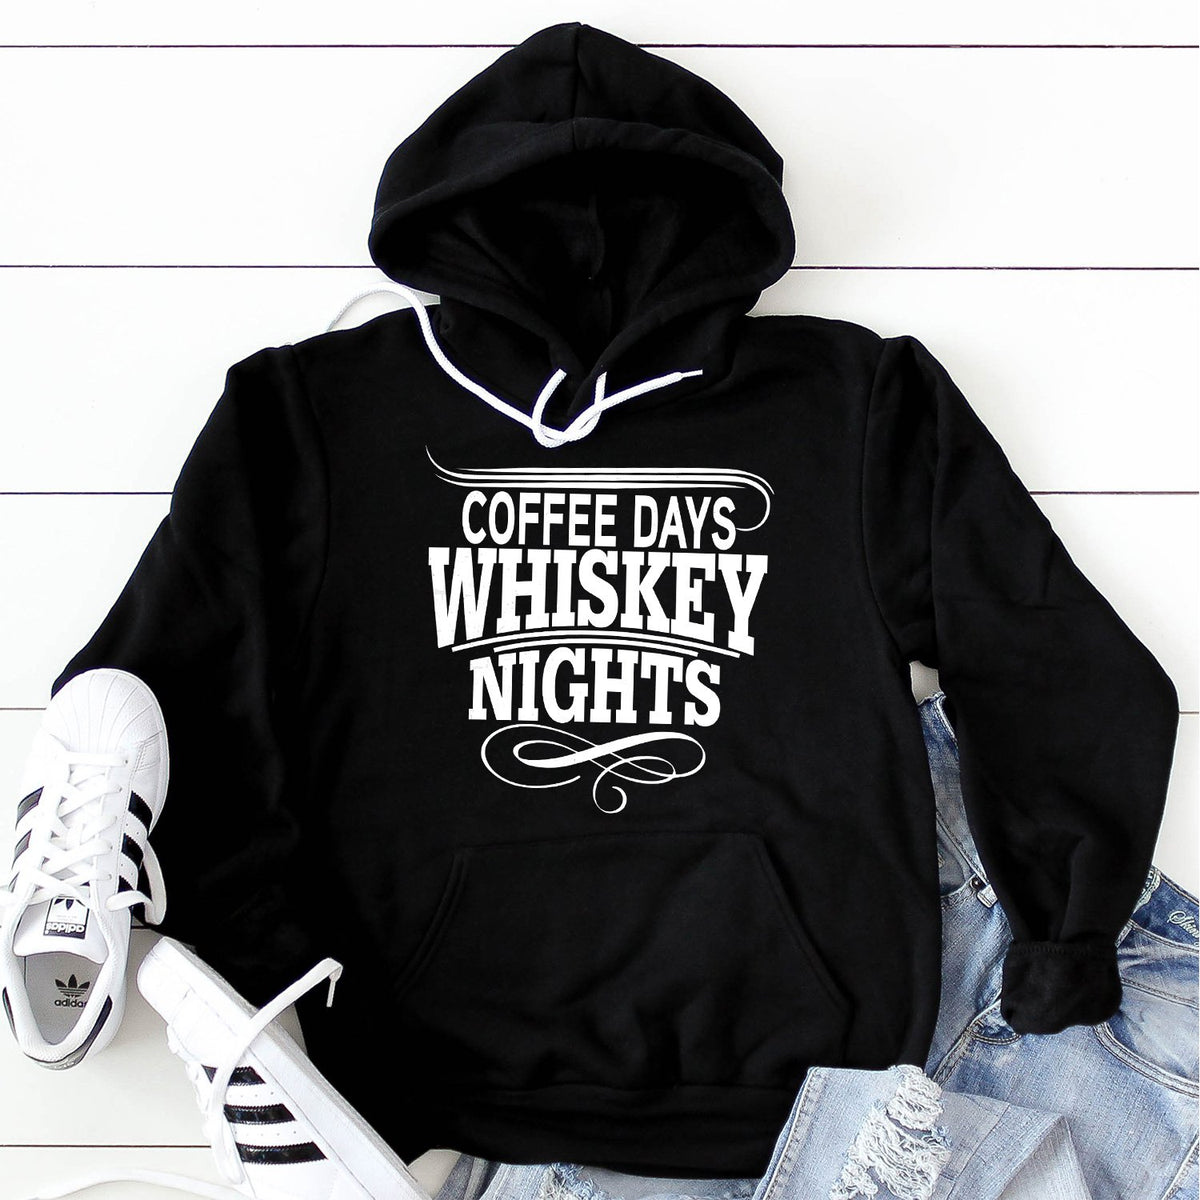 Coffee Days Whiskey Nights - Hoodie Sweatshirt